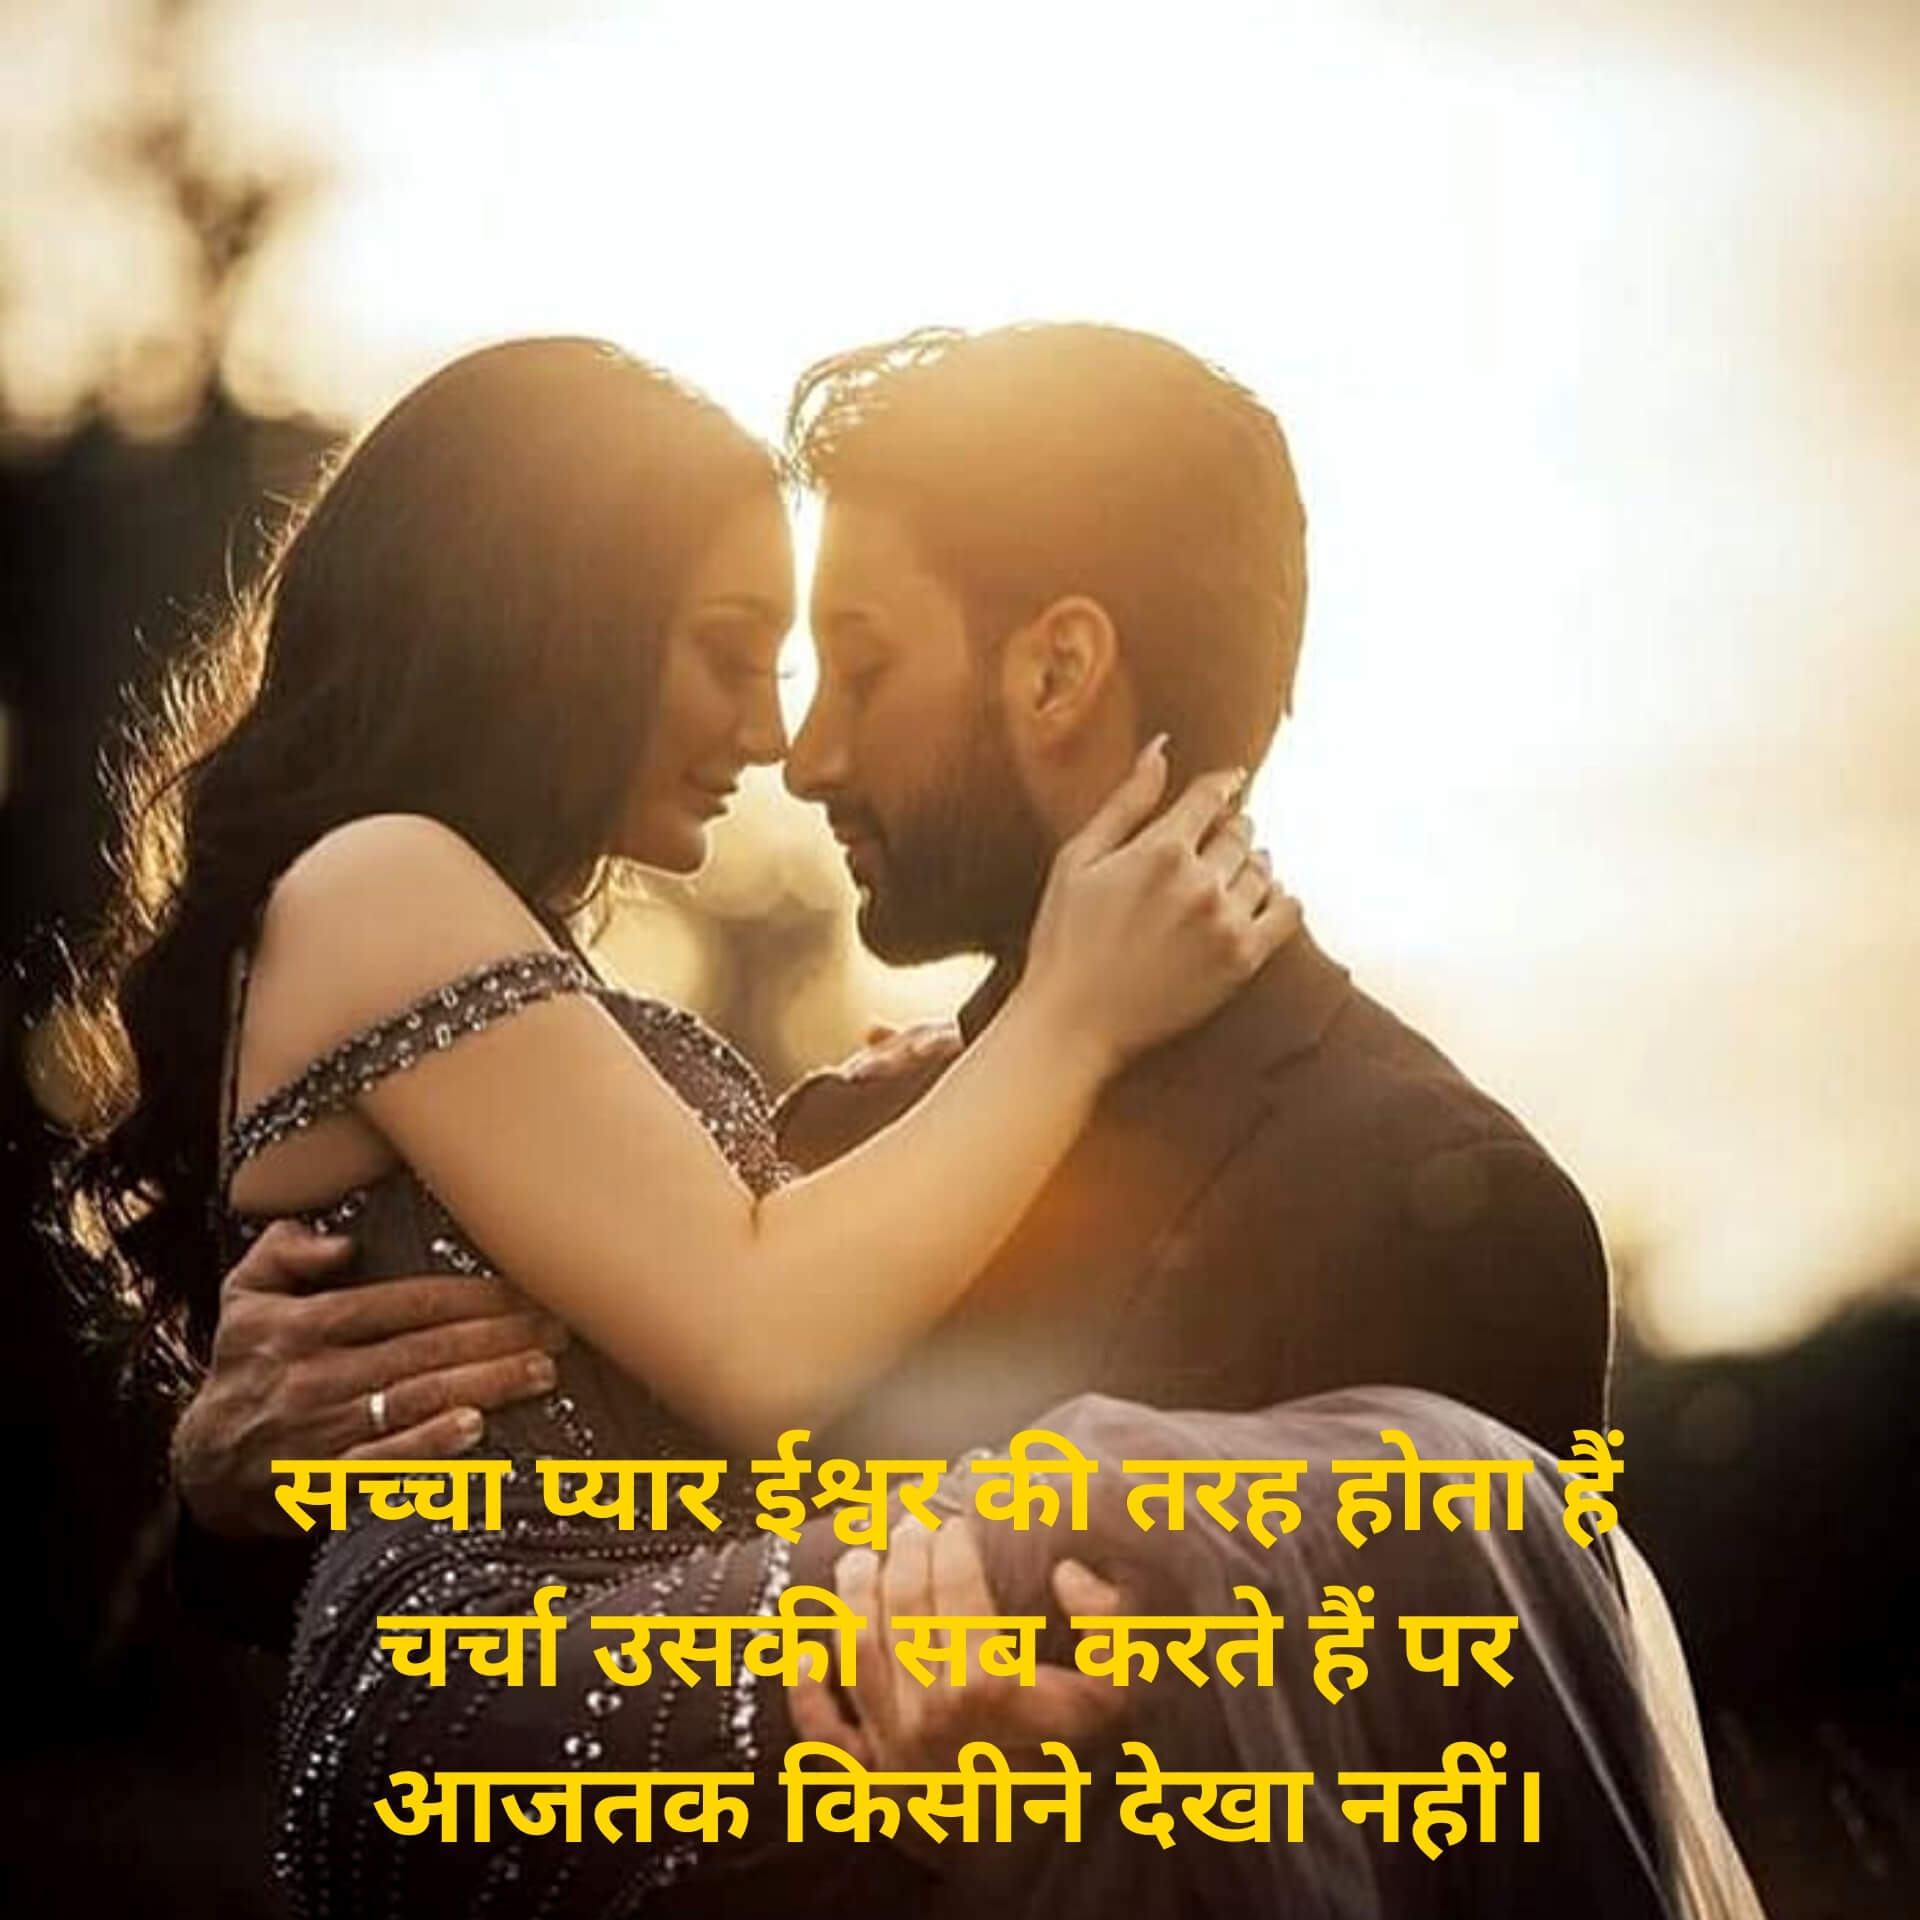 Hindi Love DP Wallpaper Pics for Whatsapptop